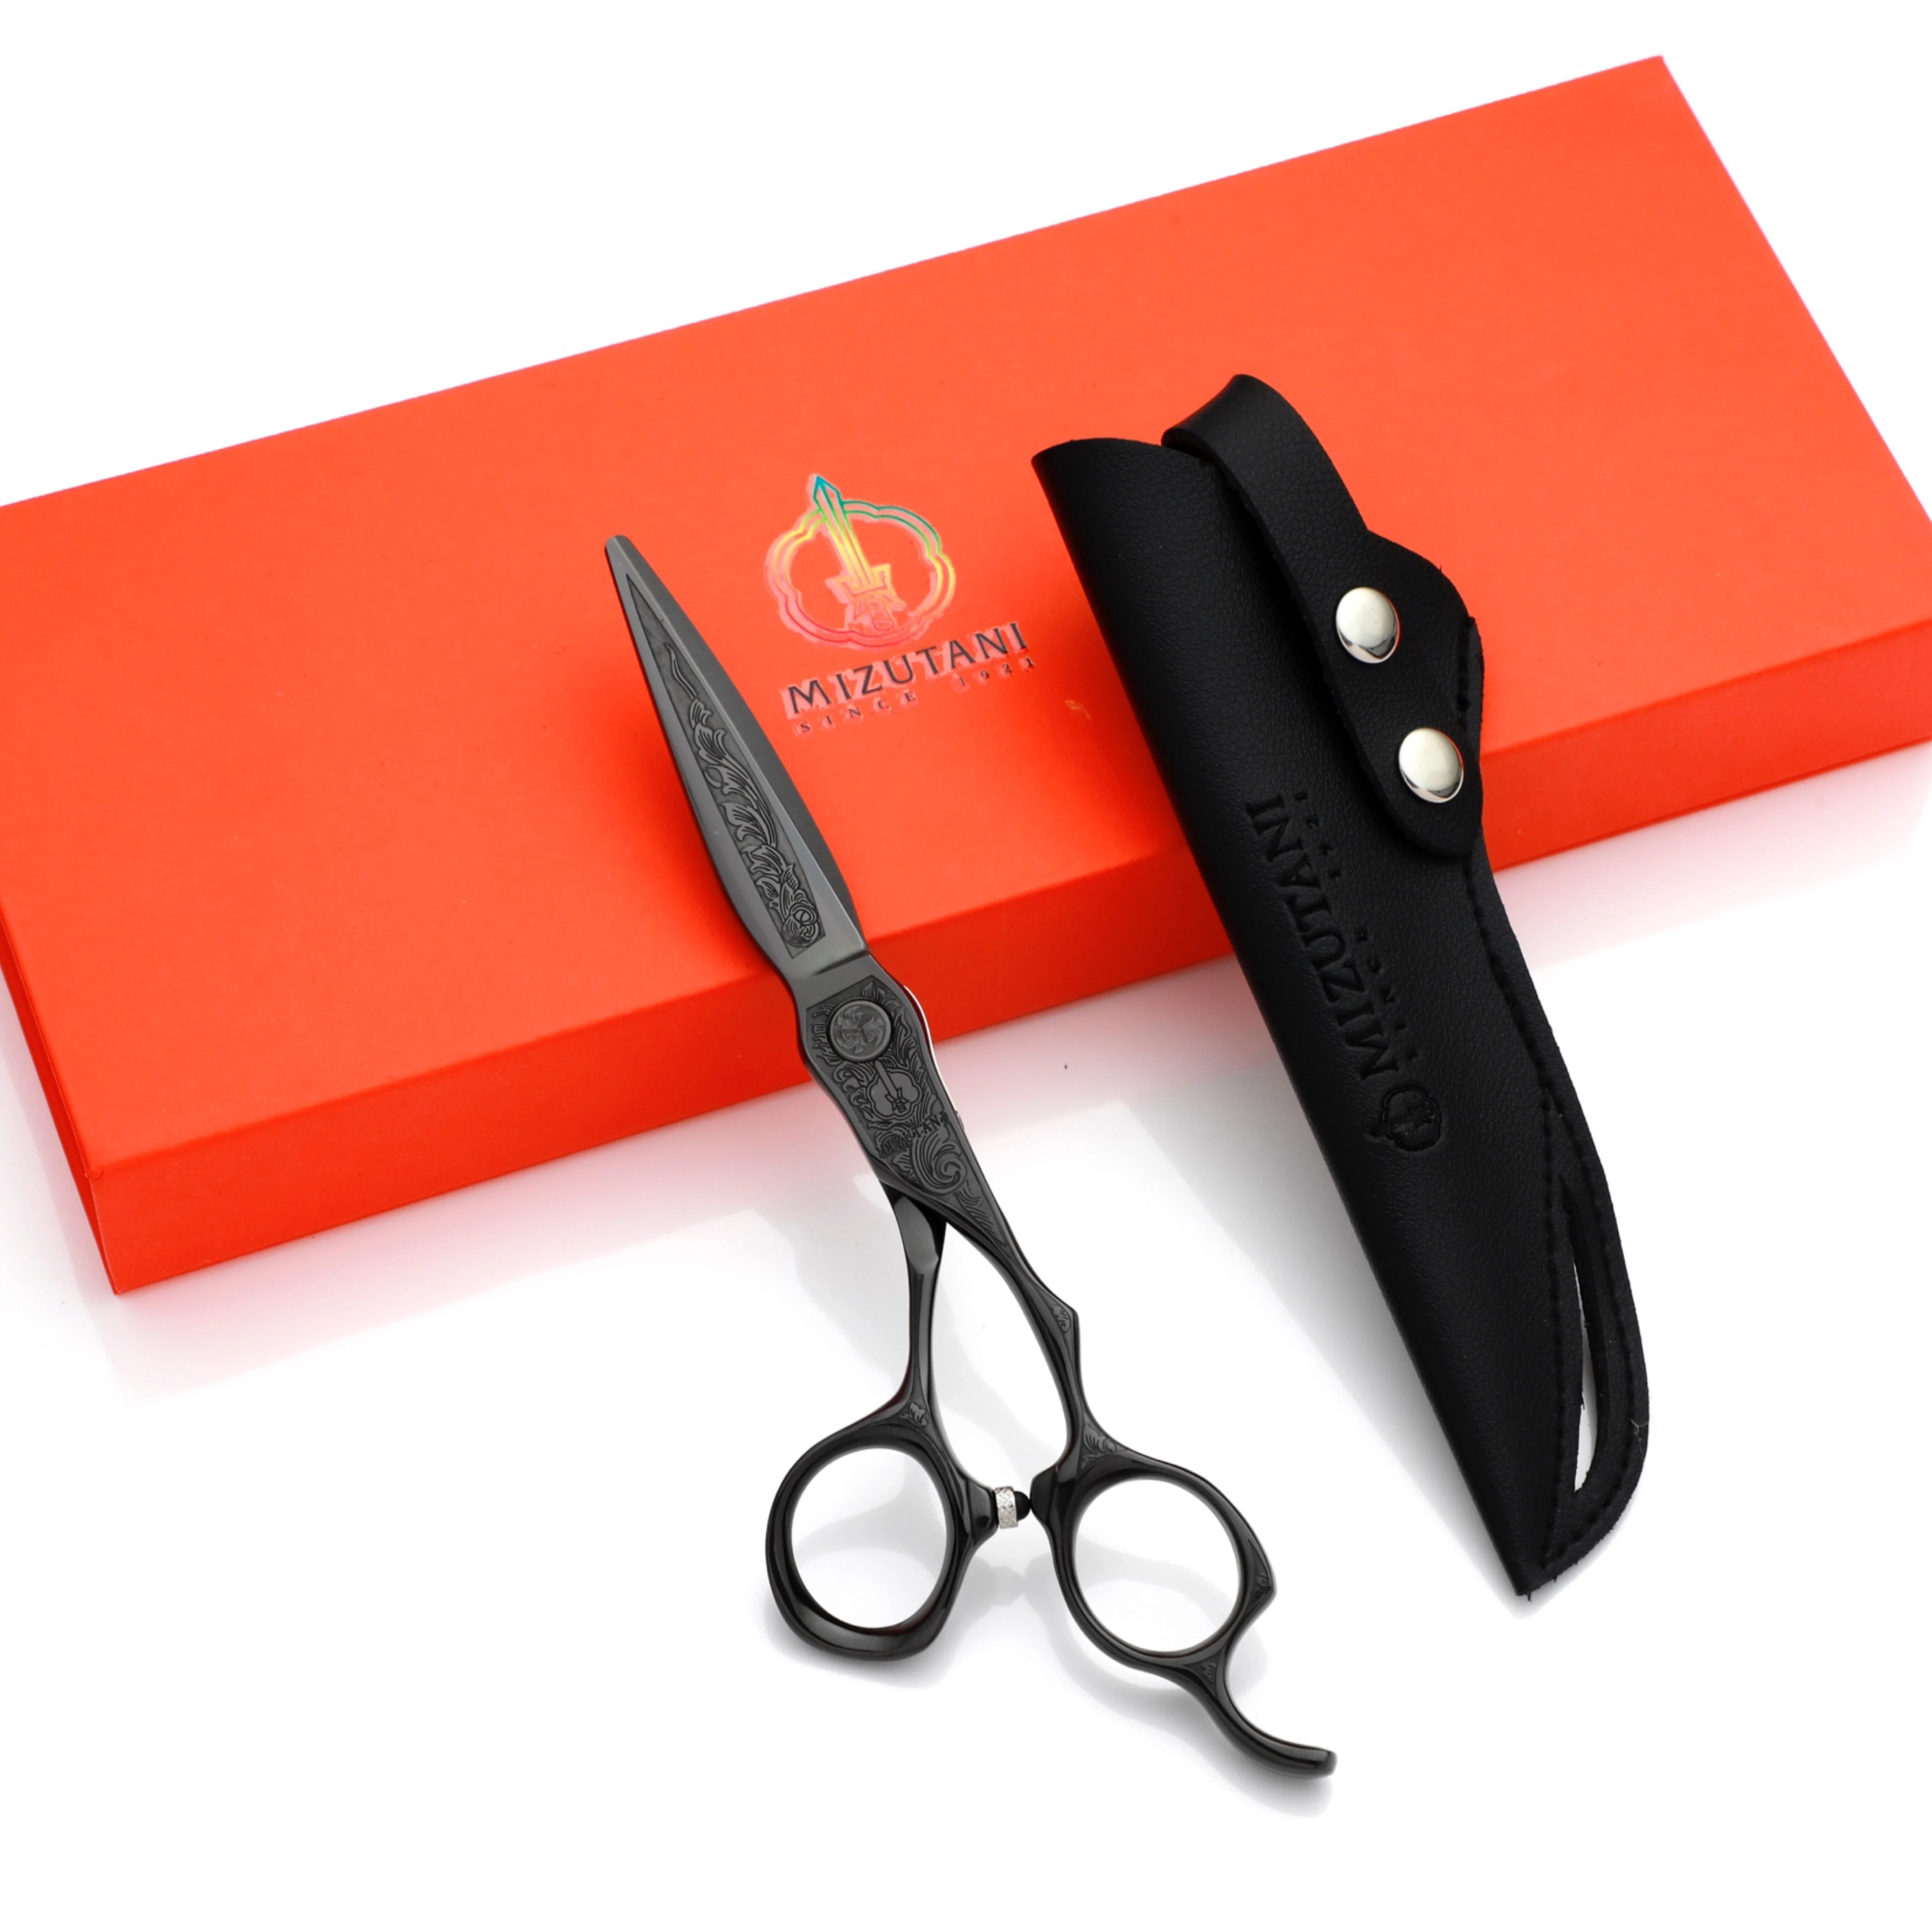 

MIZUTANI Black 6.0-inch Tungsten Steel Pattern High grade scissors Professional Hair Salon Top Professional Barber Scissor Set